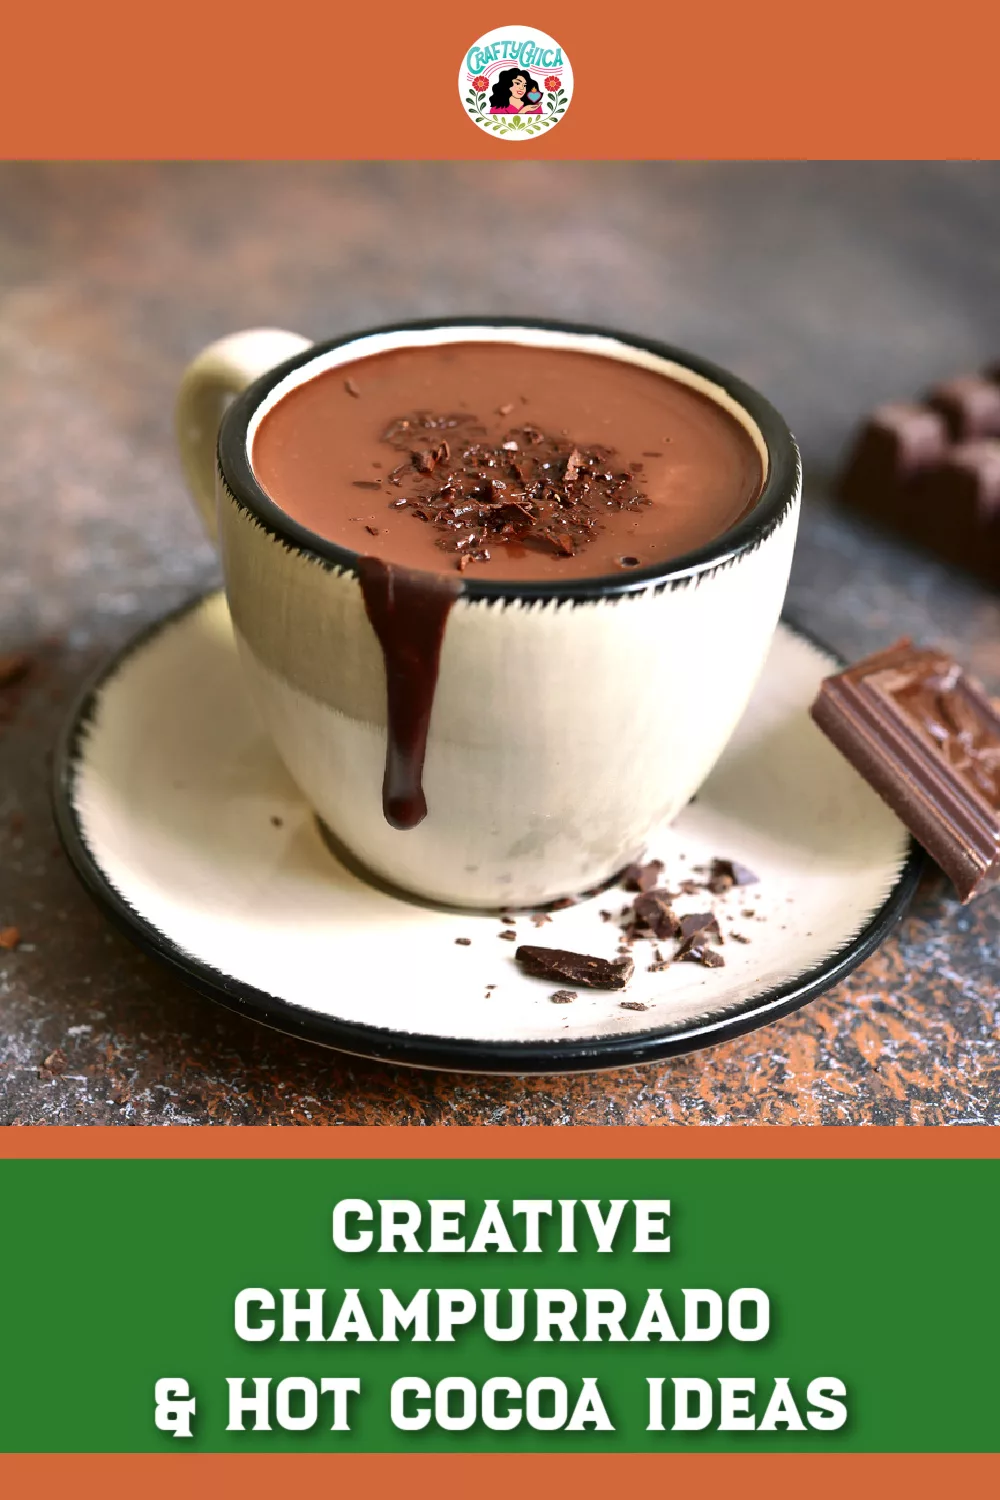 Champurrado recipes & other creative holiday hot cocoa ideas